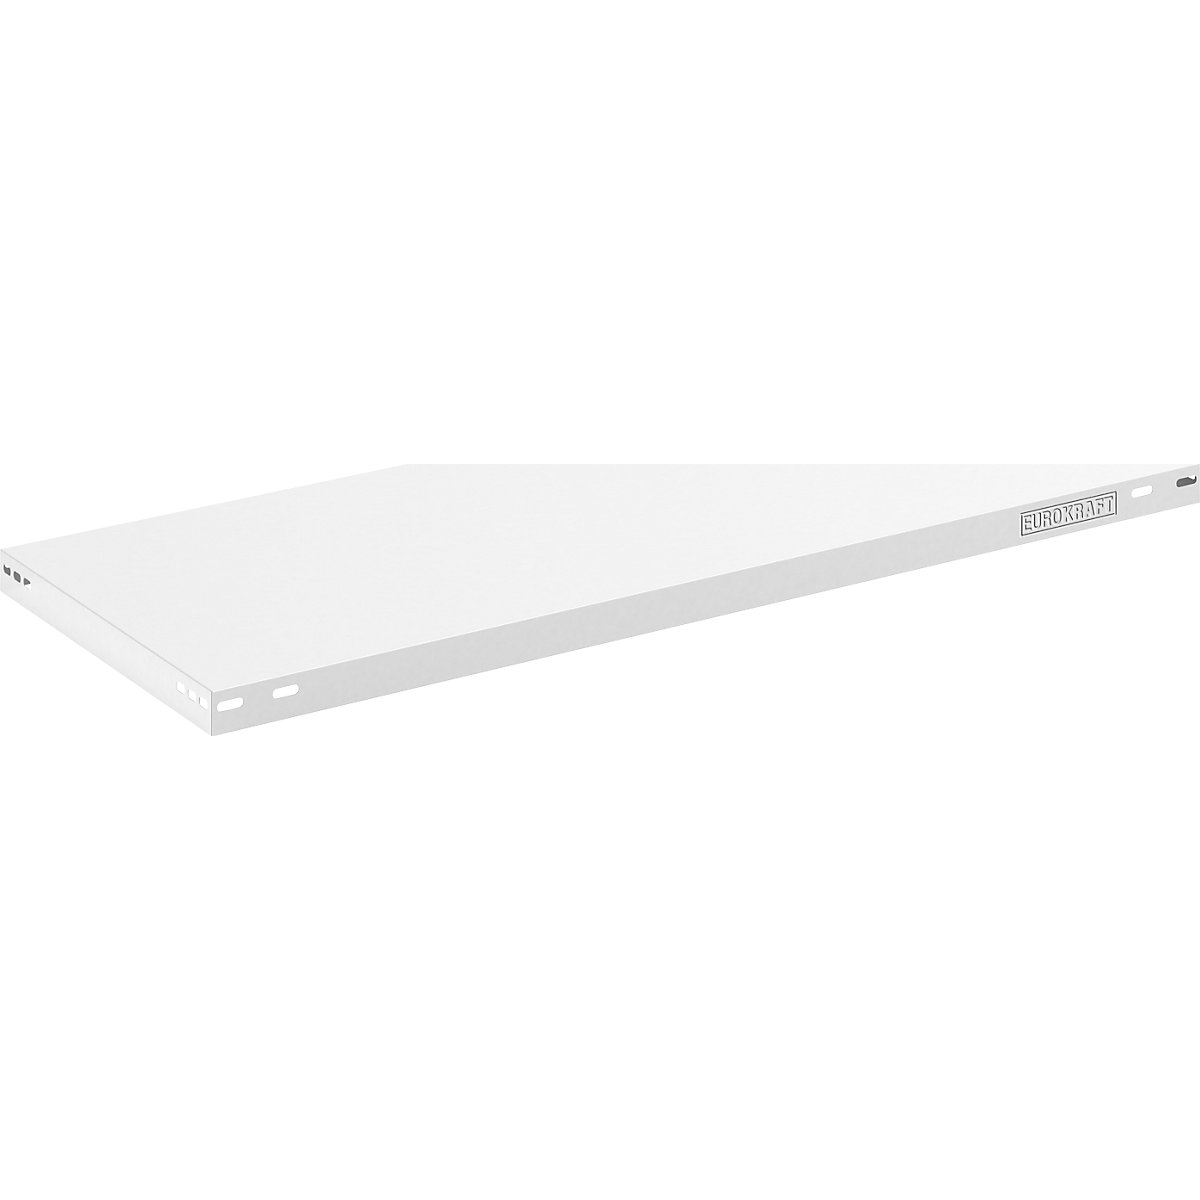 Steel shelf, max. load 125 kg – eurokraft pro, light grey, WxD 1000 x 500 mm